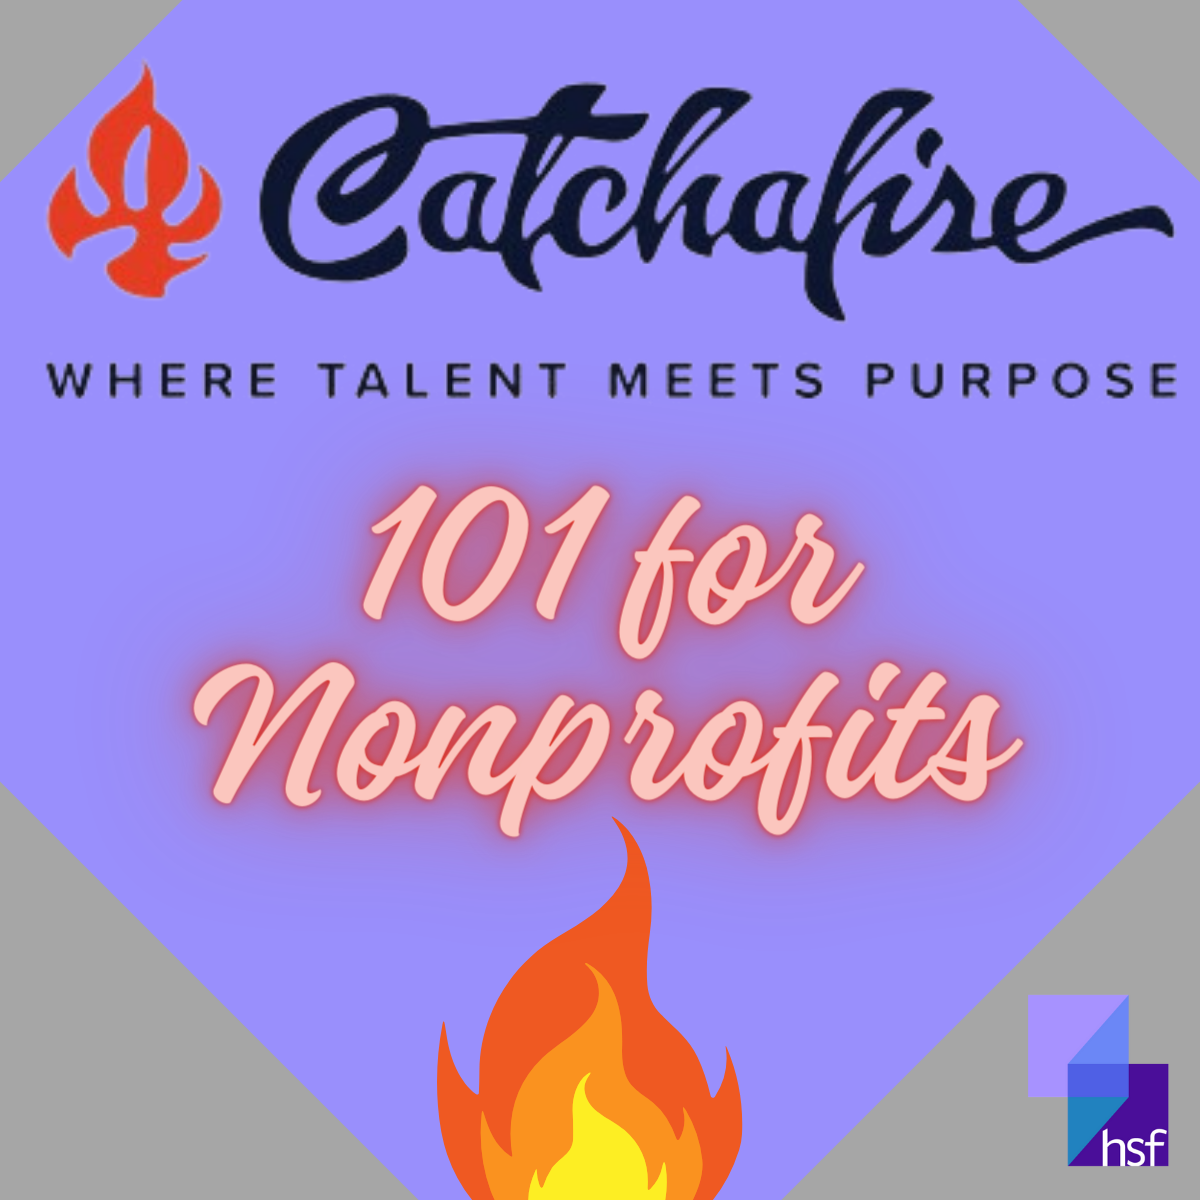 catchafire 101 for nonprofits